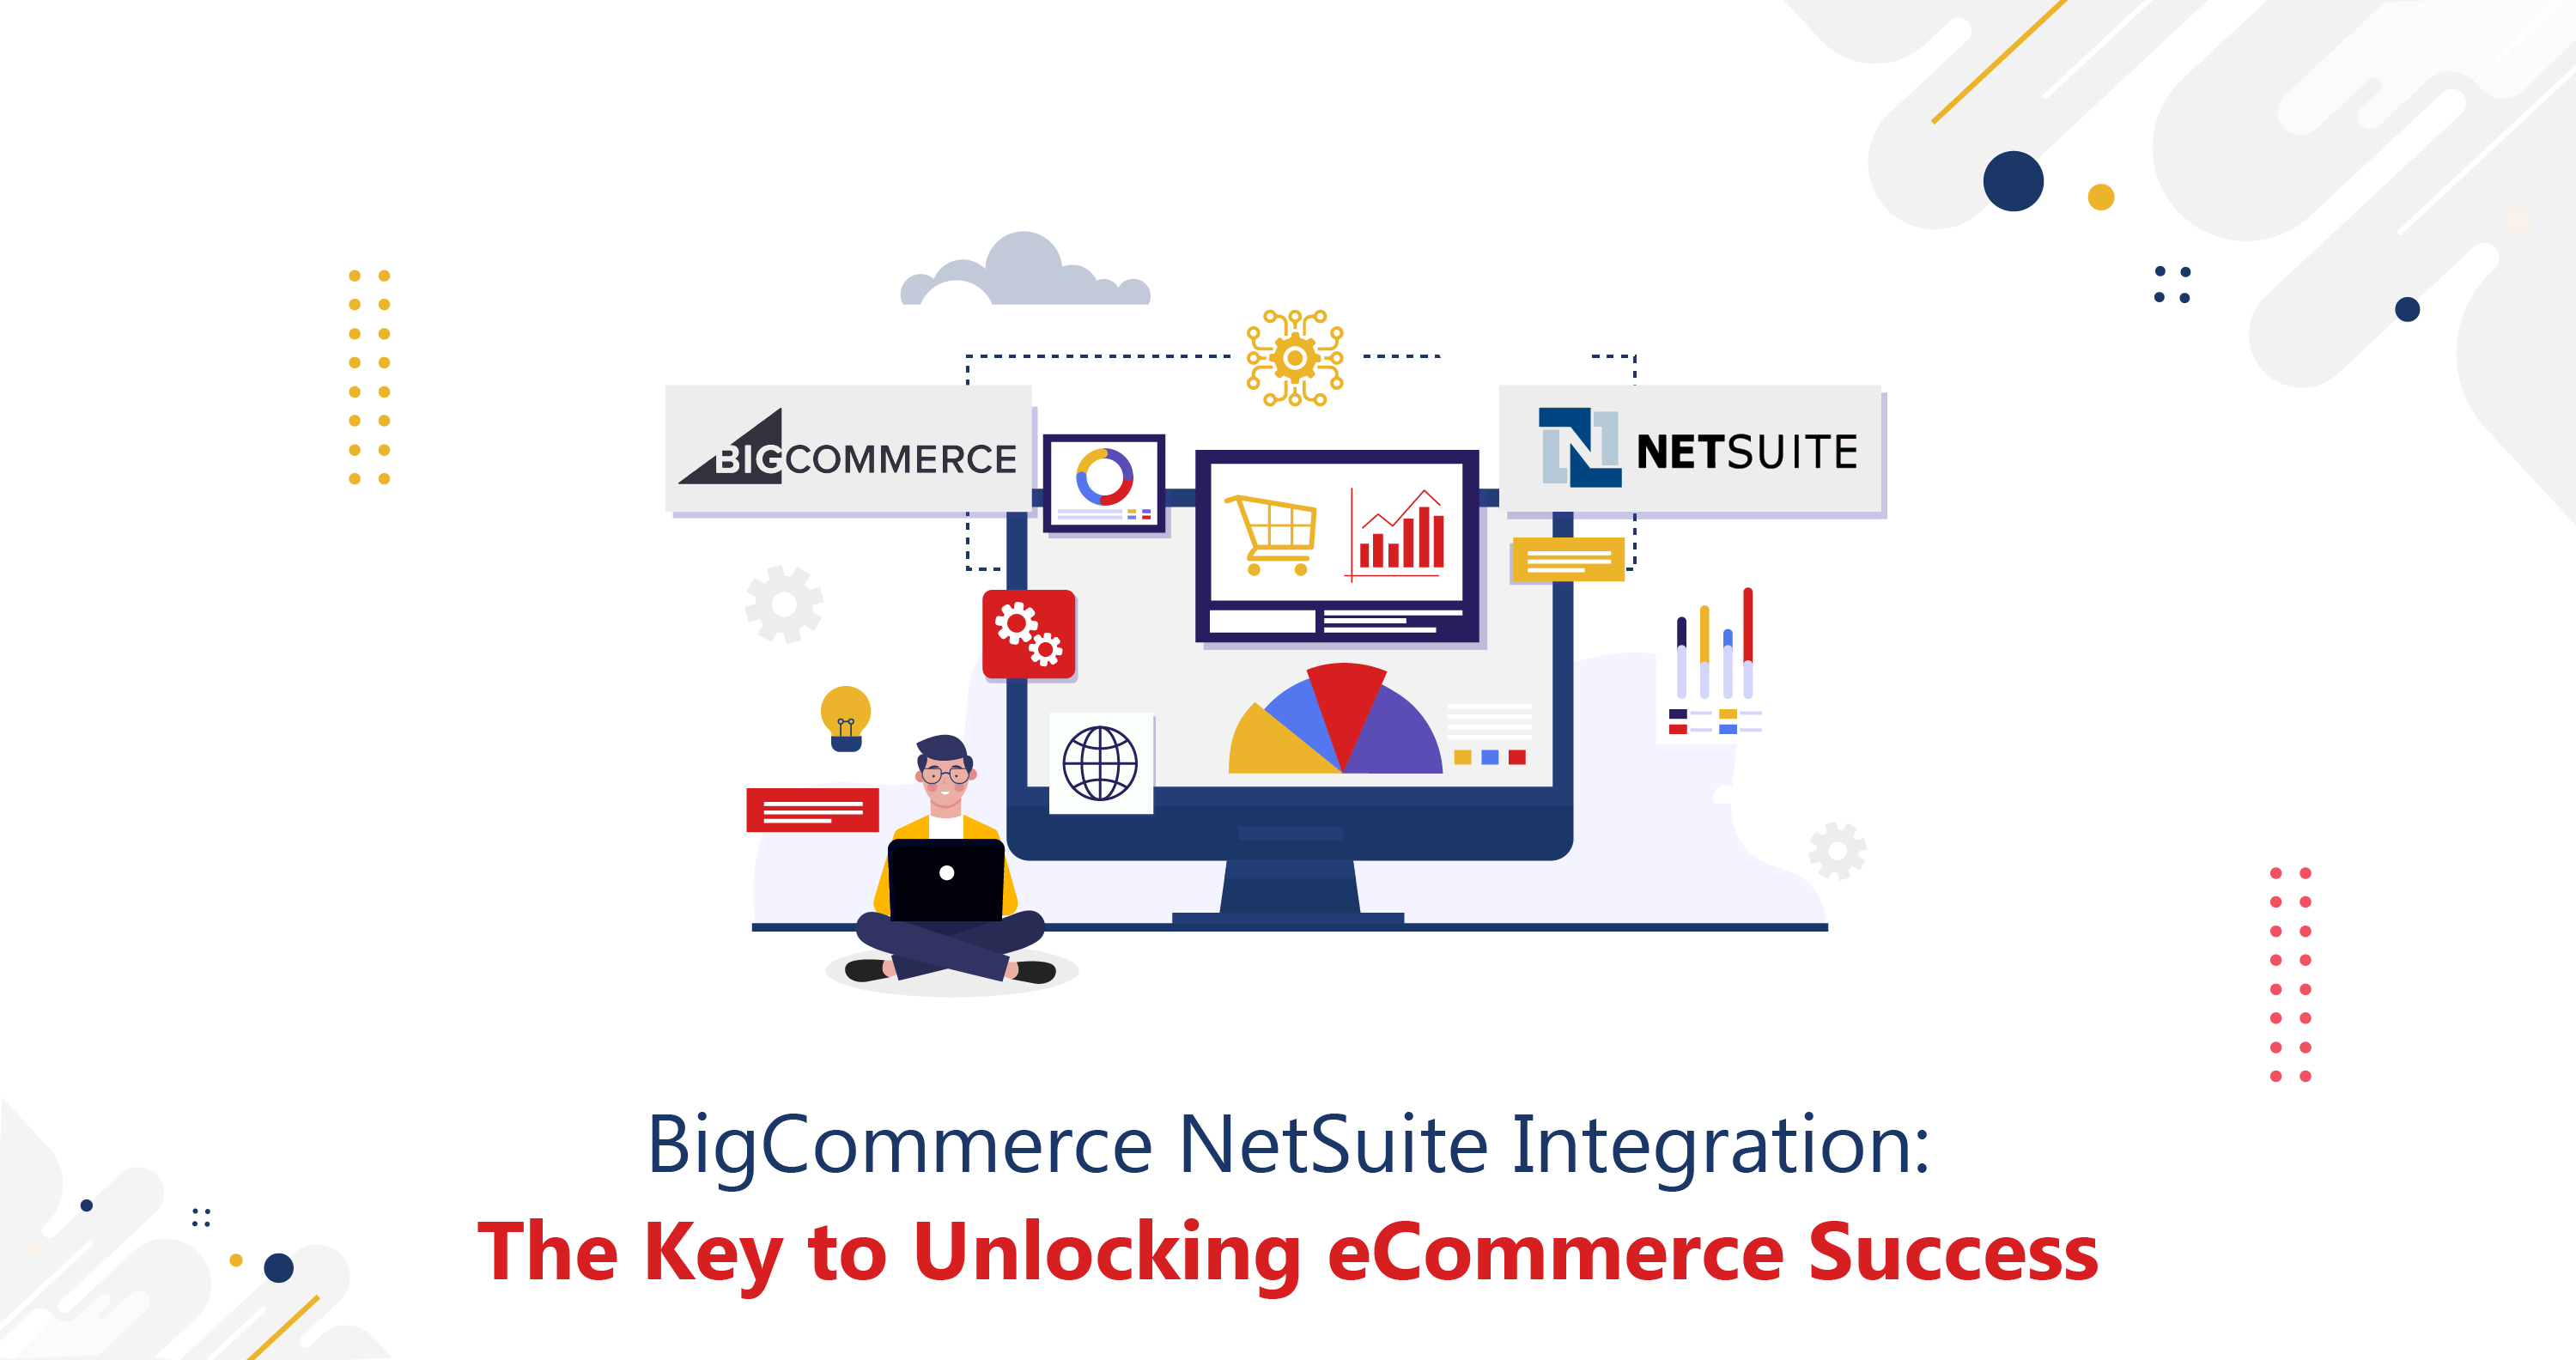 BigCommerce NetSuite Integration: The Key To Unlocking eCommerce Success